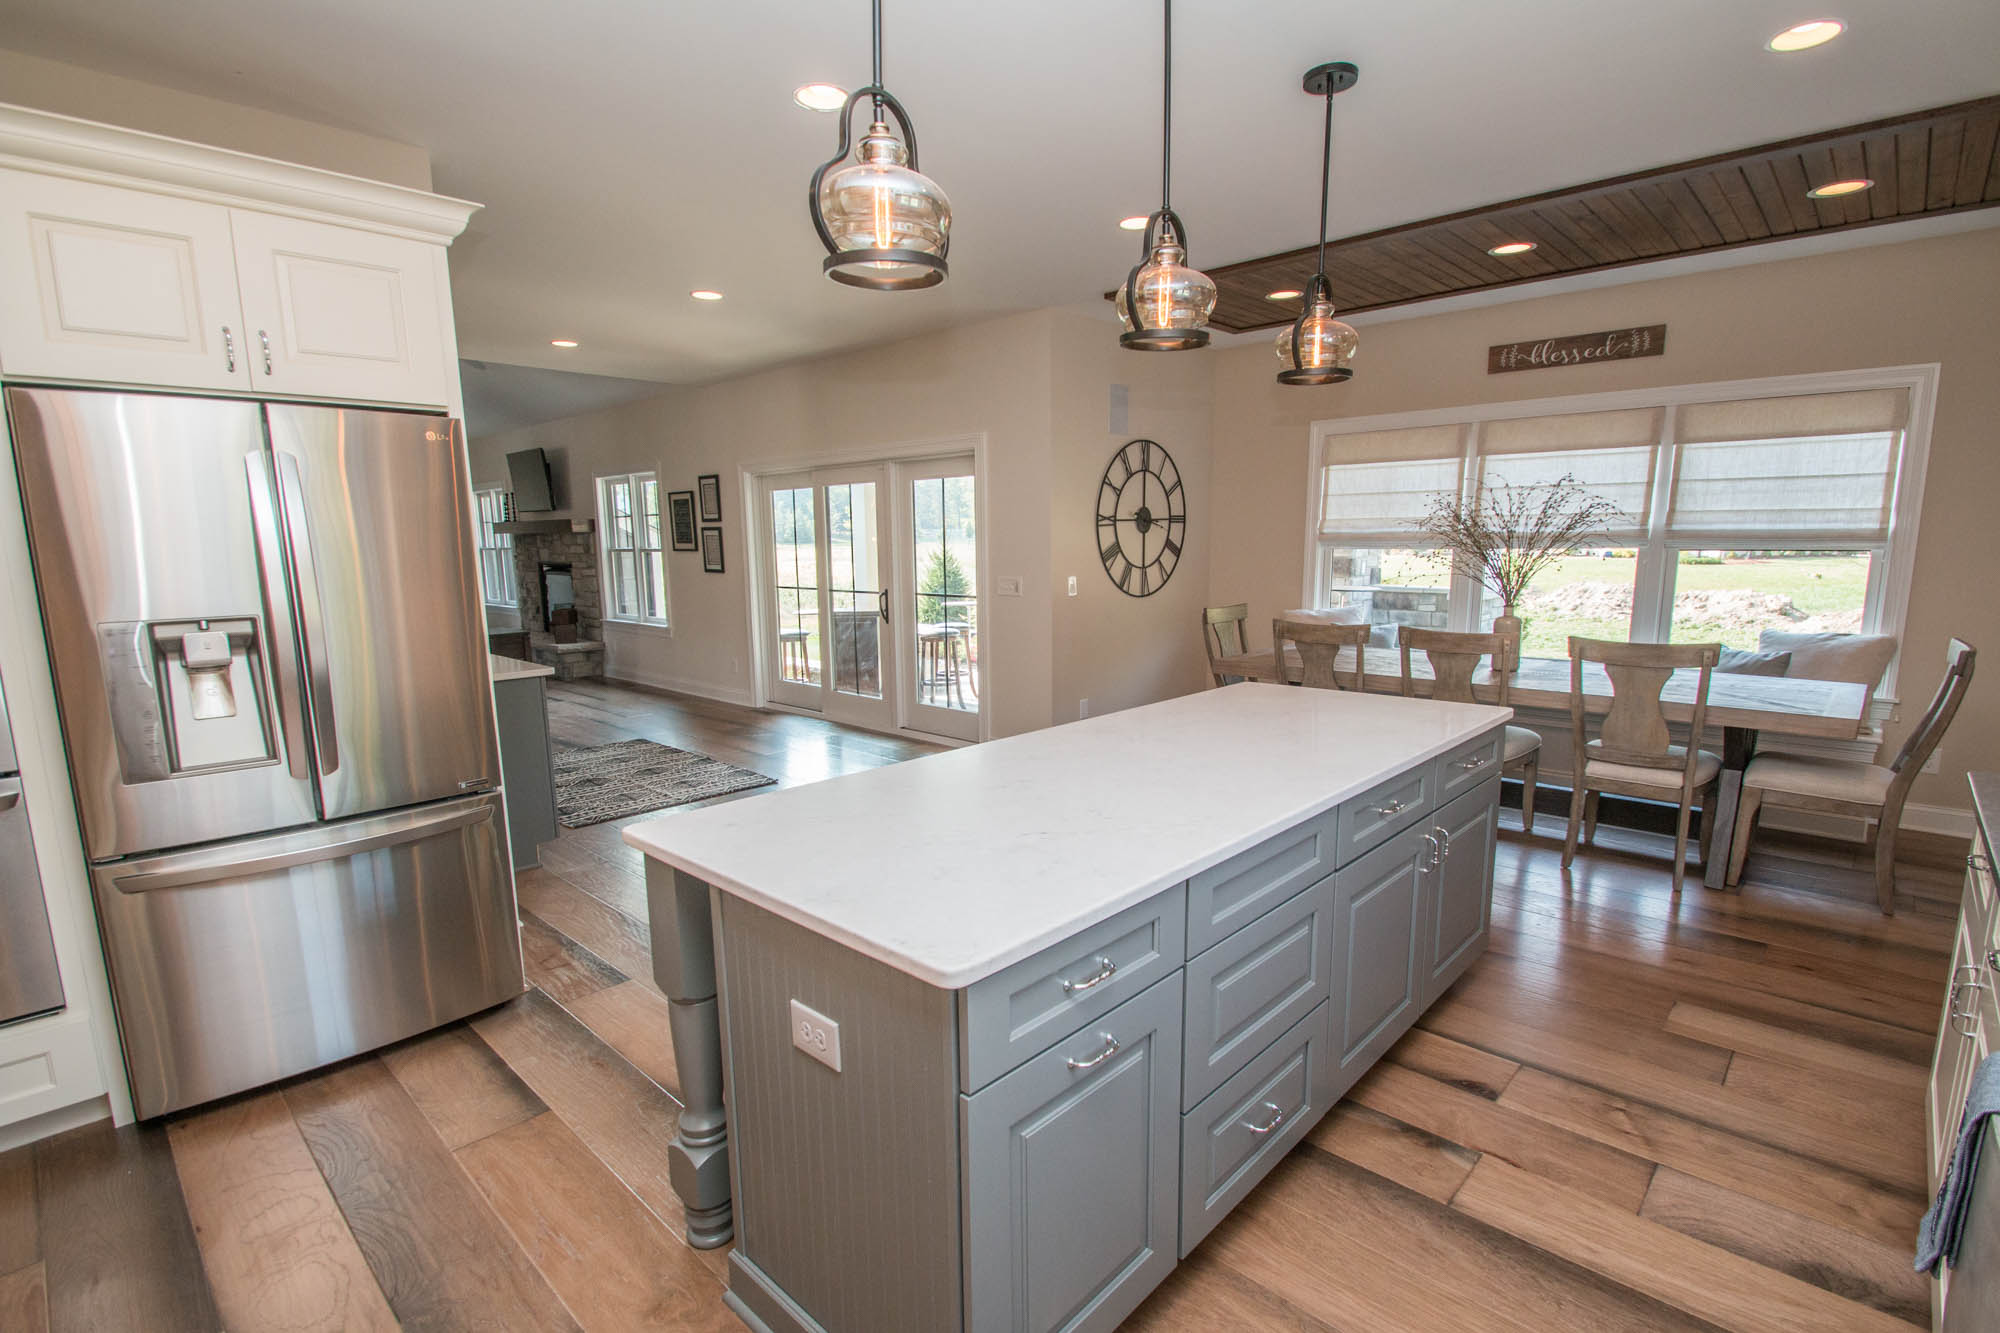 Contemporary kitchen renovation | Avon, OH | North Star Premier Custom Homes